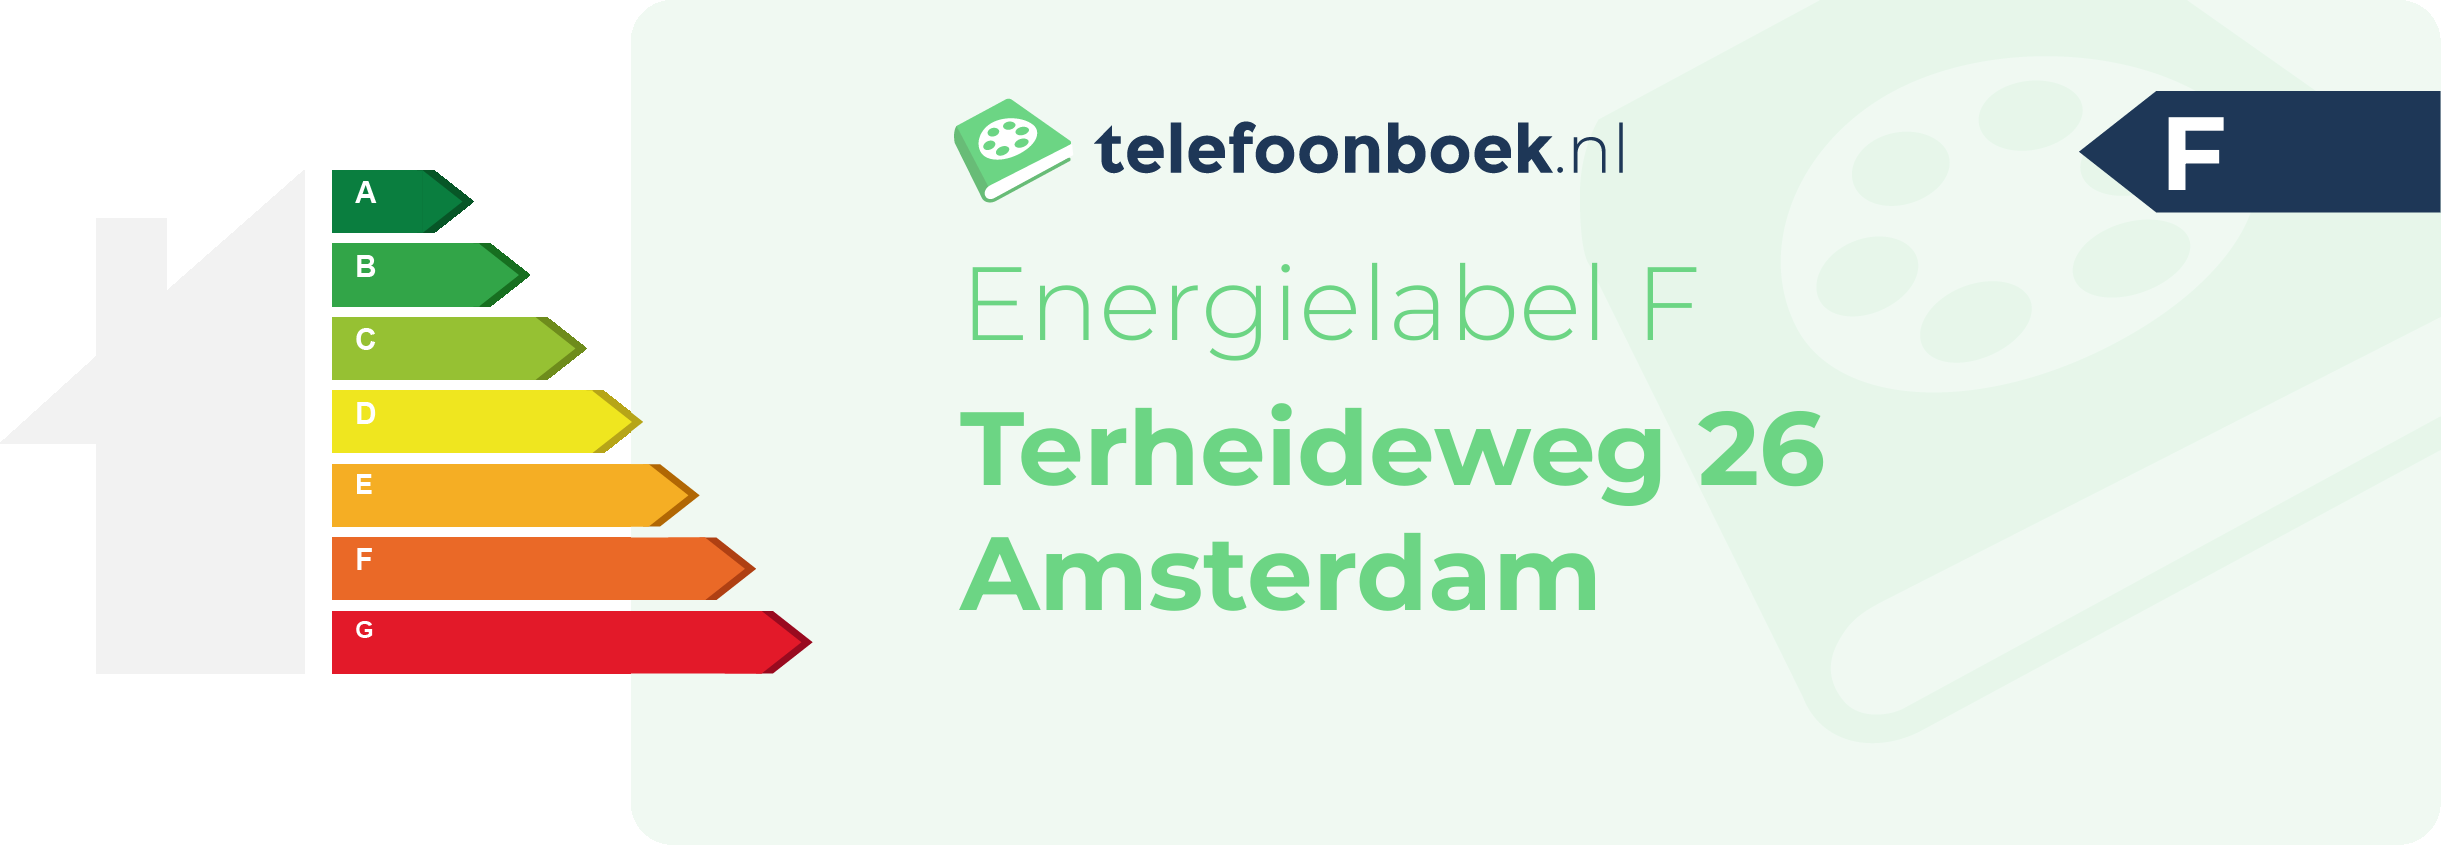 Energielabel Terheideweg 26 Amsterdam